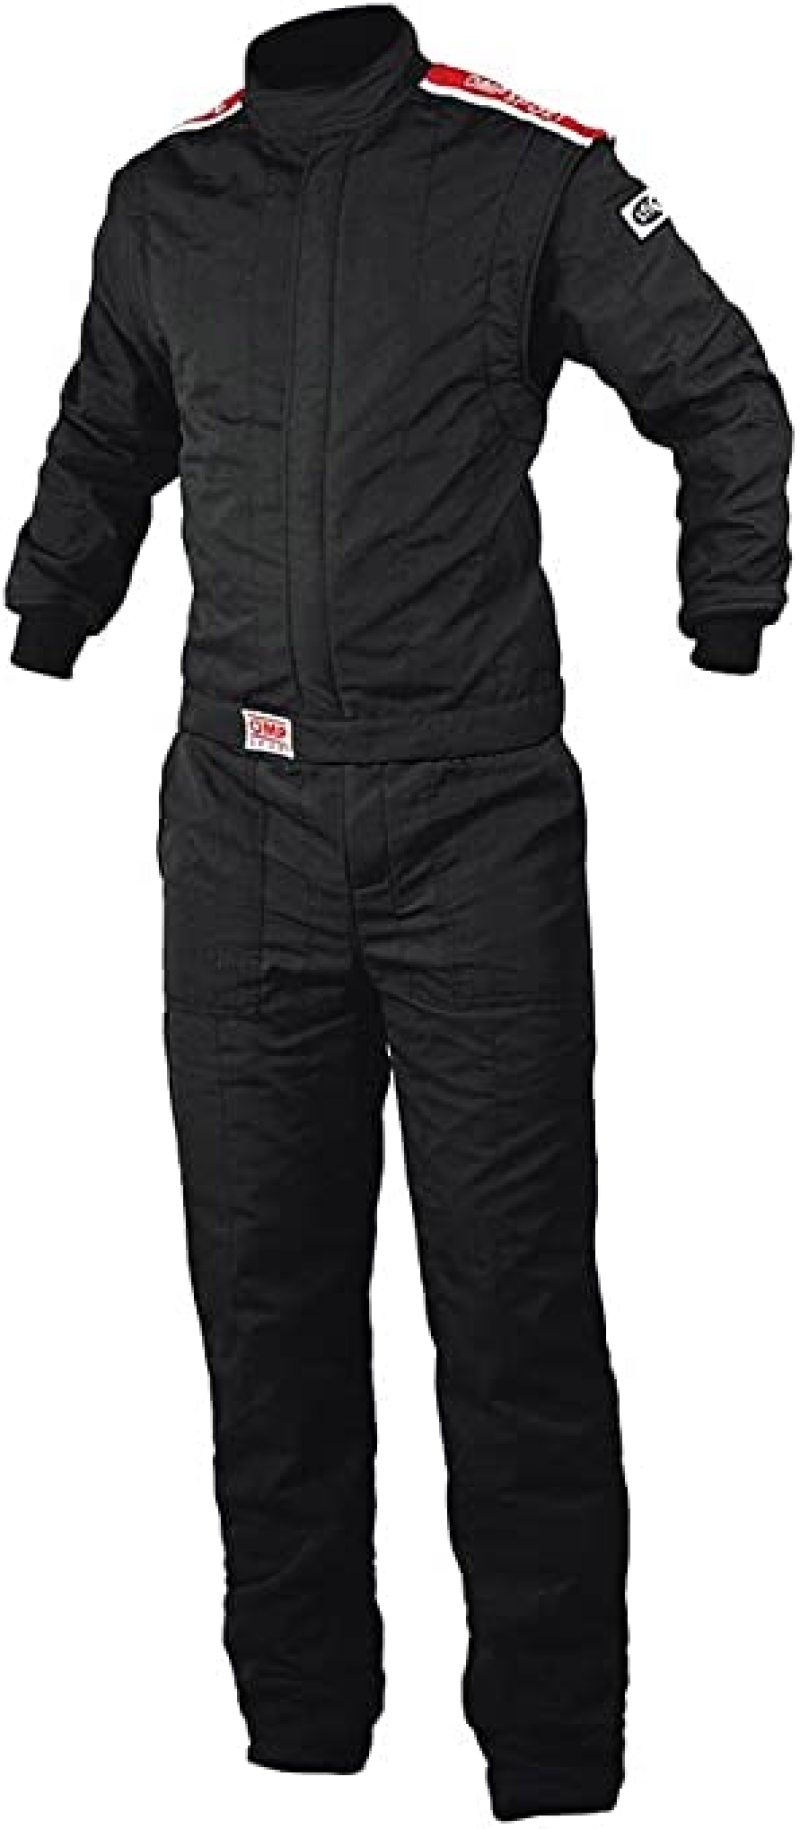 OMP Os 20 Boot Cut Suit - Medium (Black) (Fia/Sfi) - IA01848071M